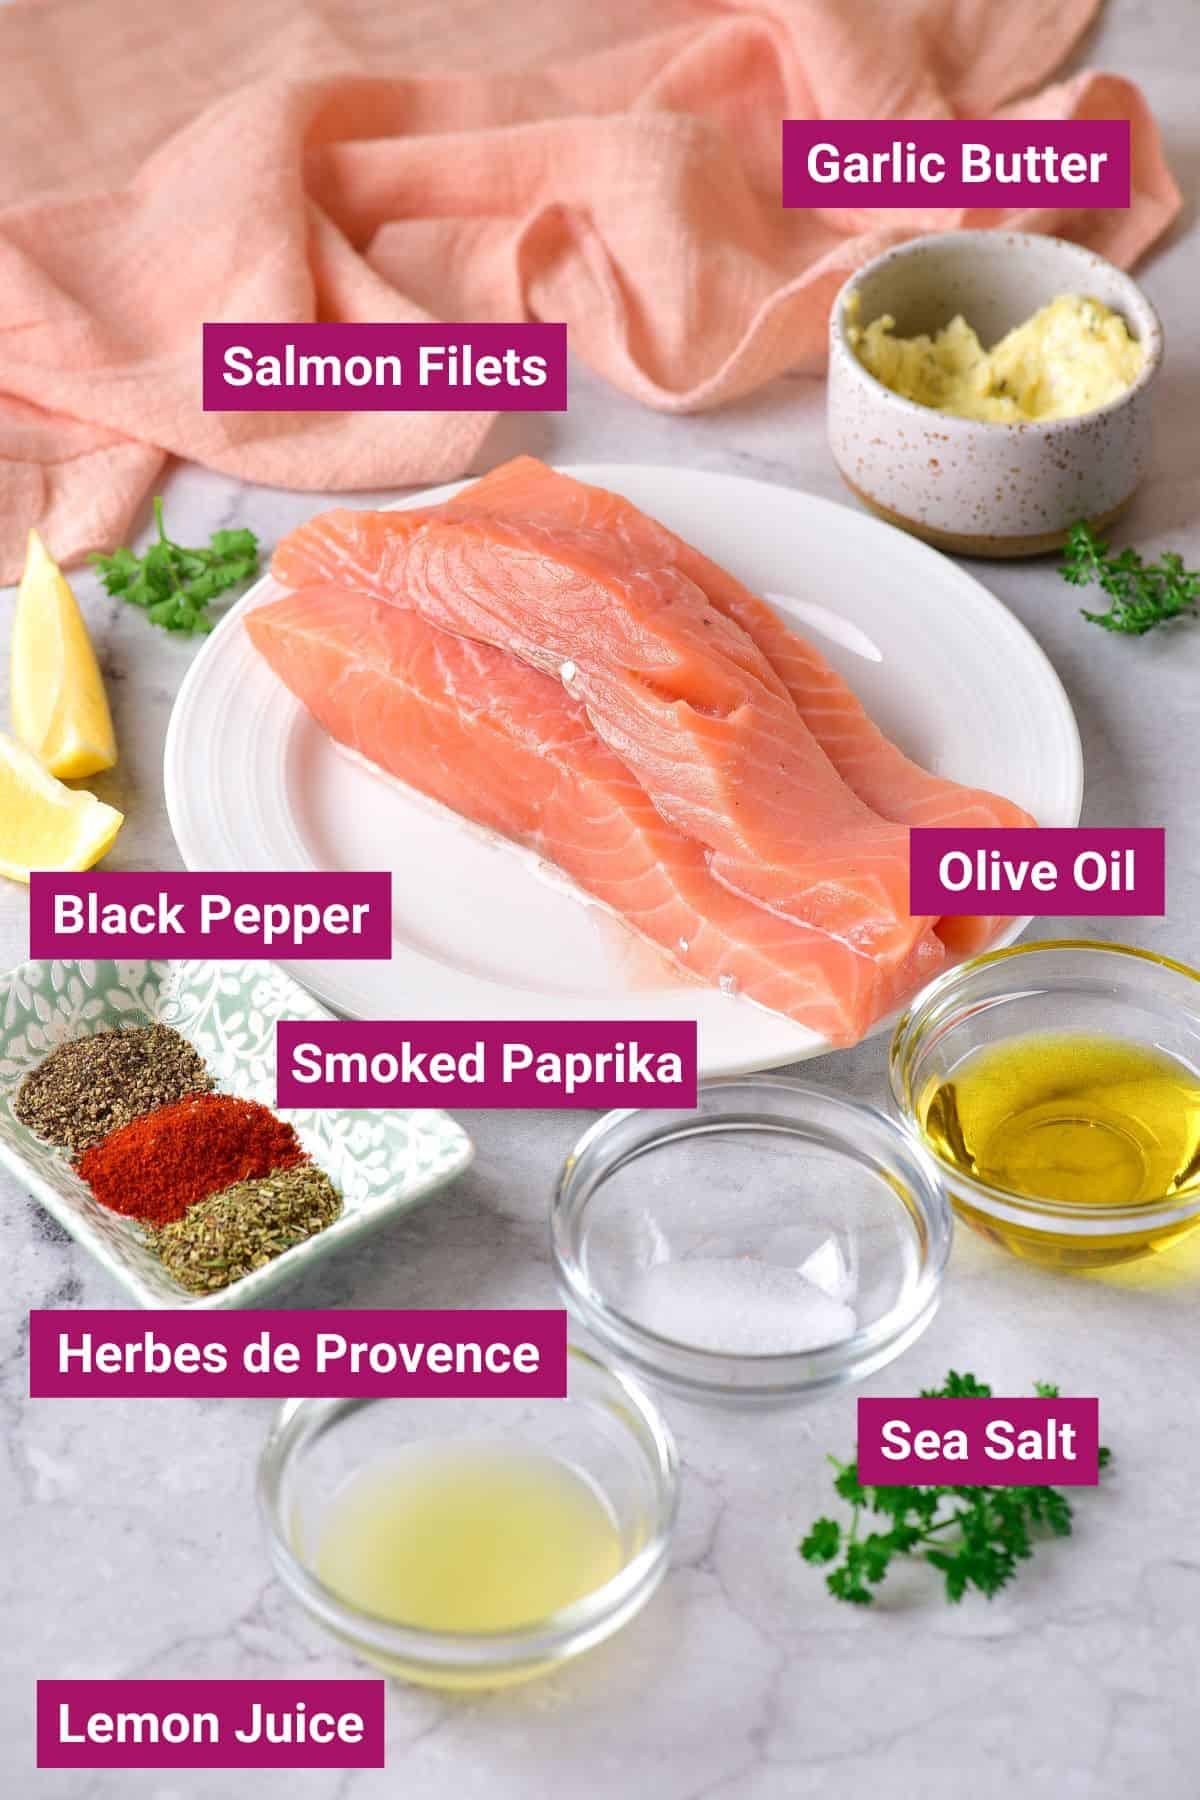 salmon filets, garlic butter, spices, olive oil, salt and lemon juice on separate bowls